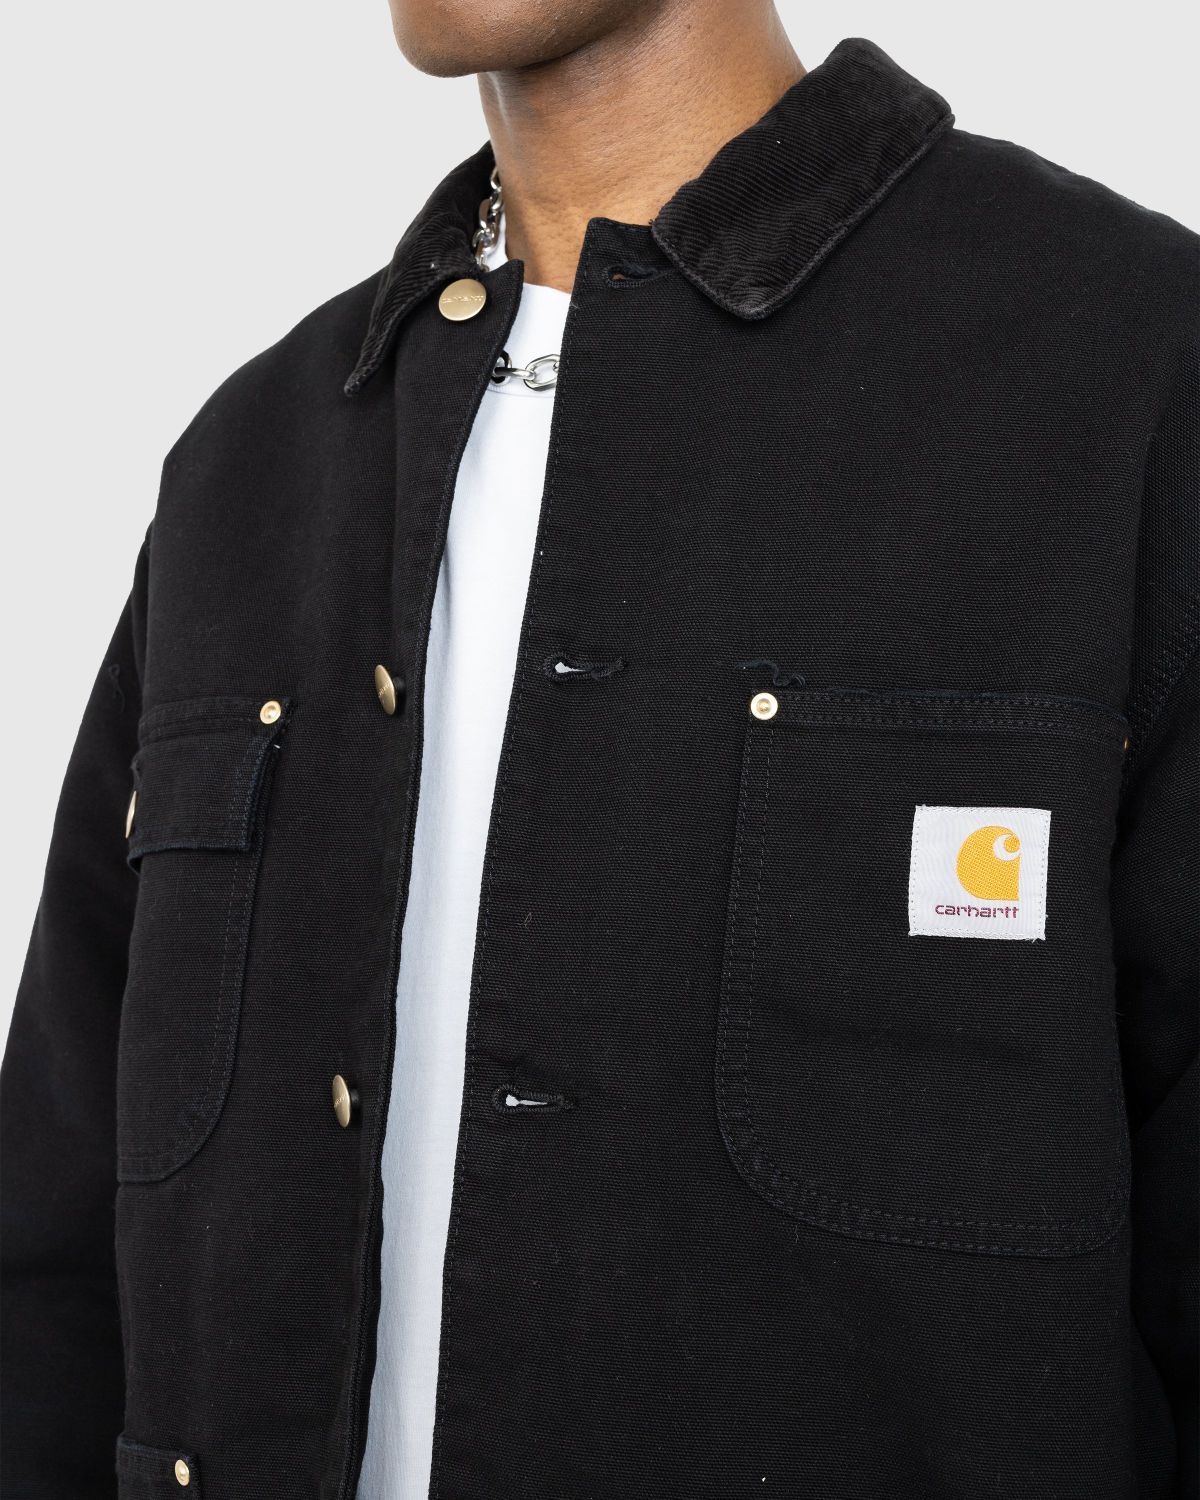 Carhartt WIP – OG Chore Coat Black/Aged Canvas - Outerwear - Black - Image 4